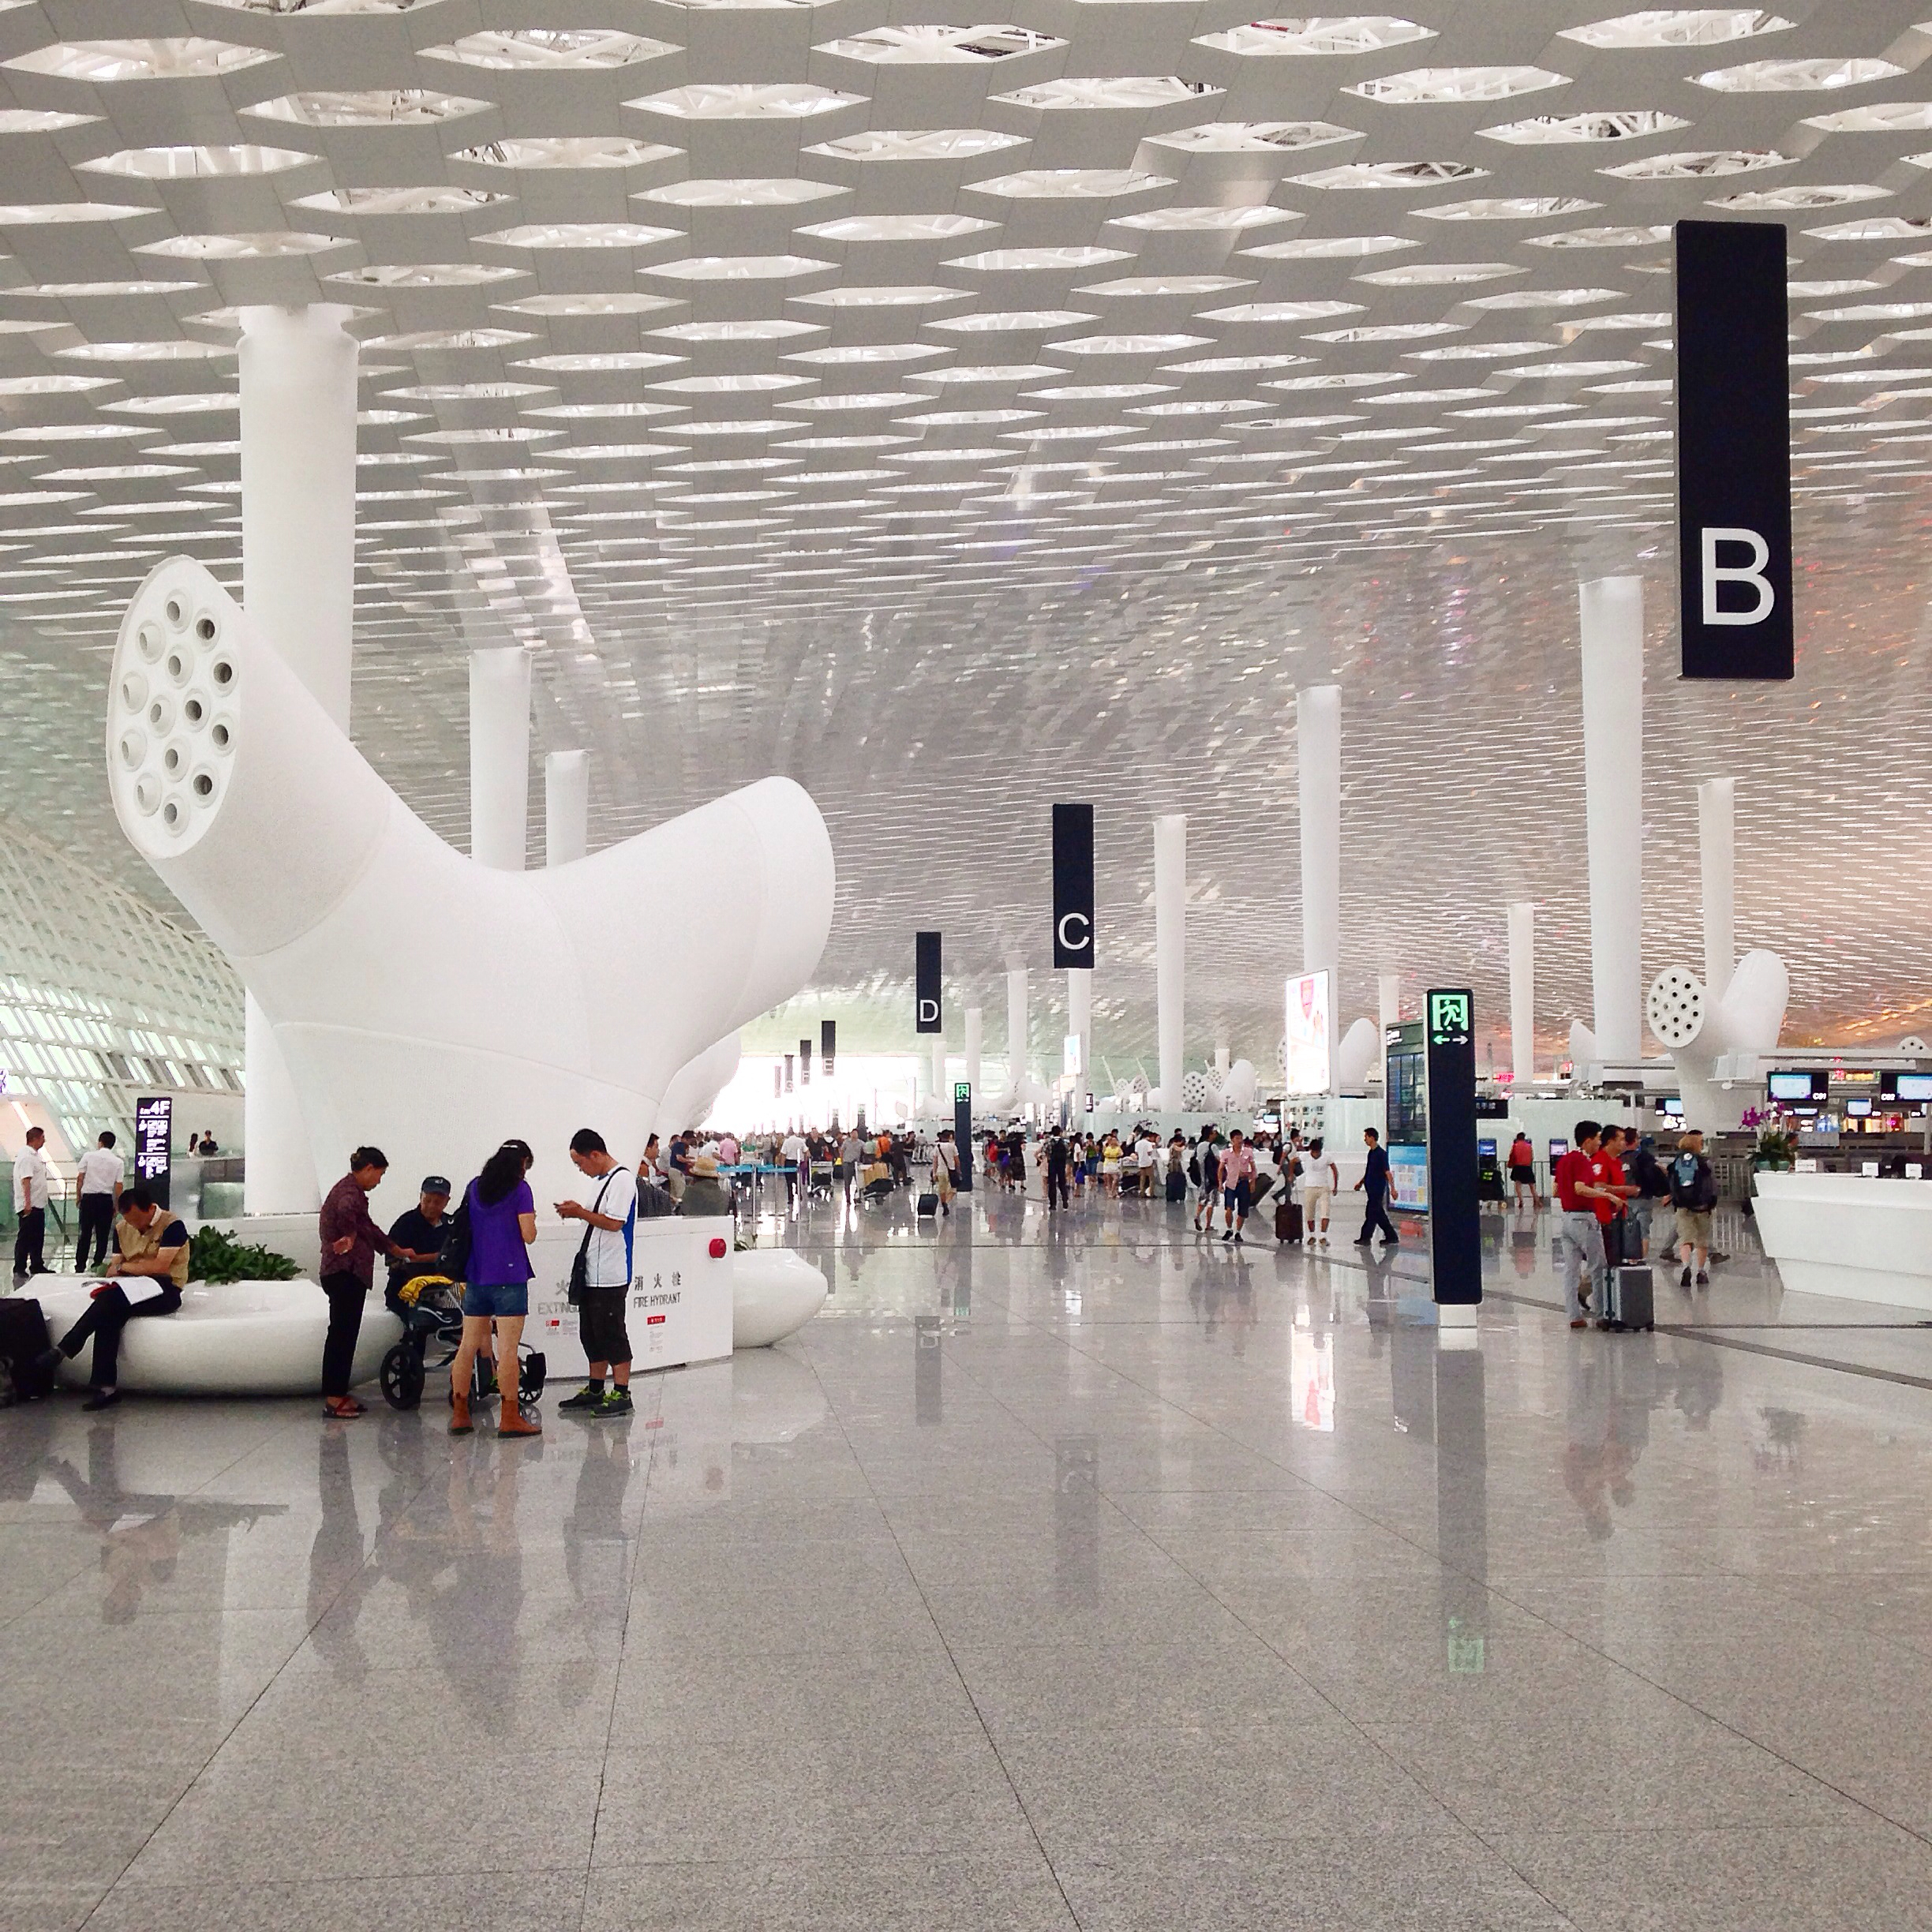 A futuristic airport greets visitors to Shenzhen